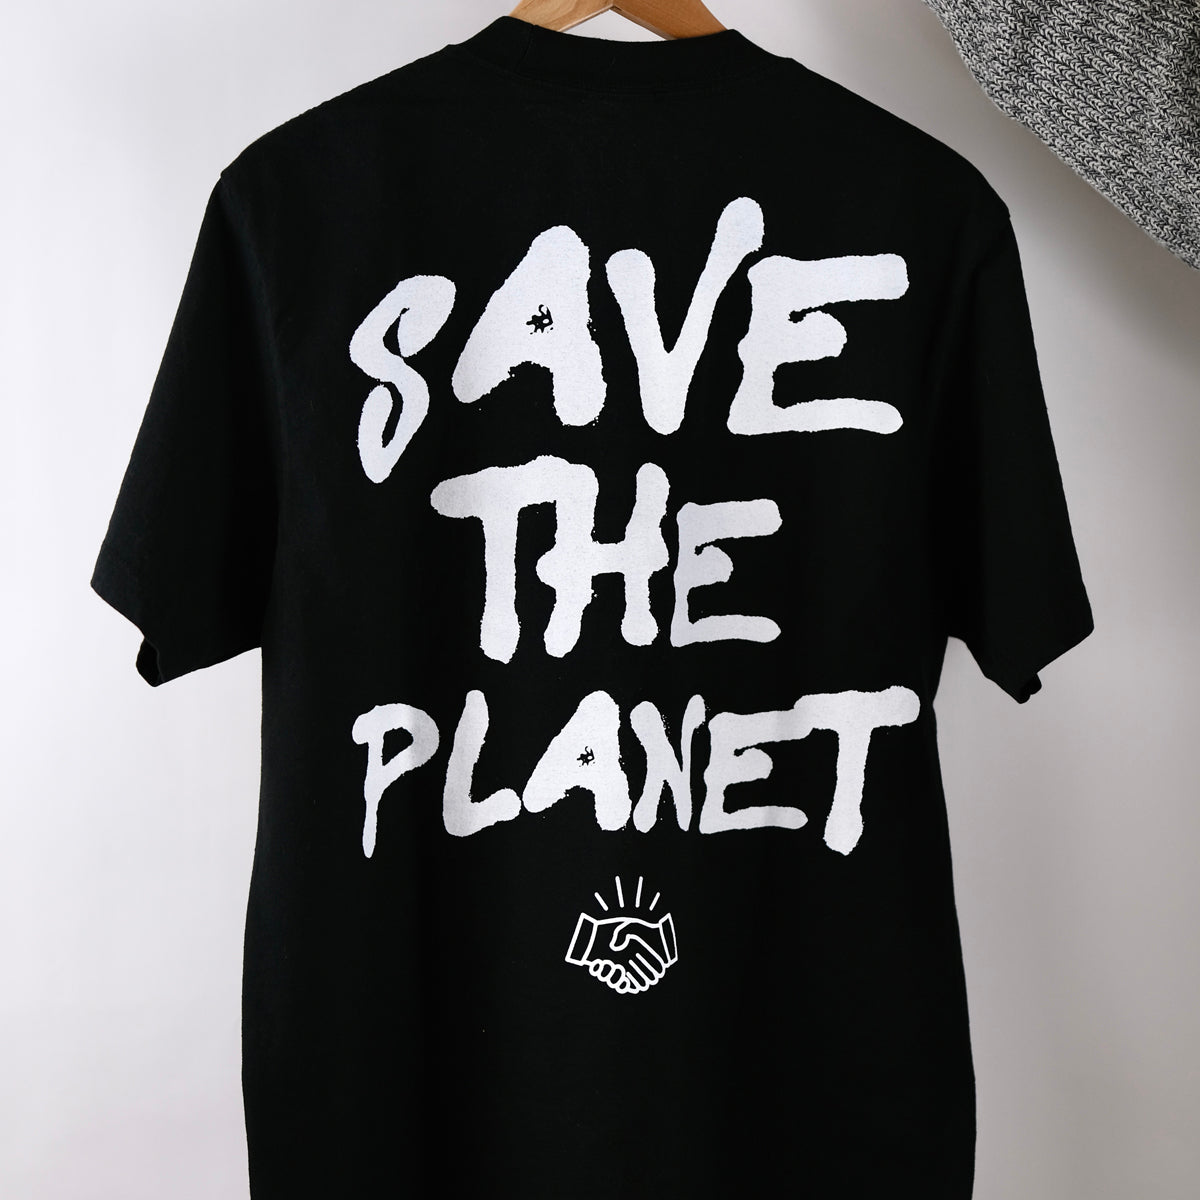 UNTD x Nakanari Terry x Spiki “Save the Planet” Tee